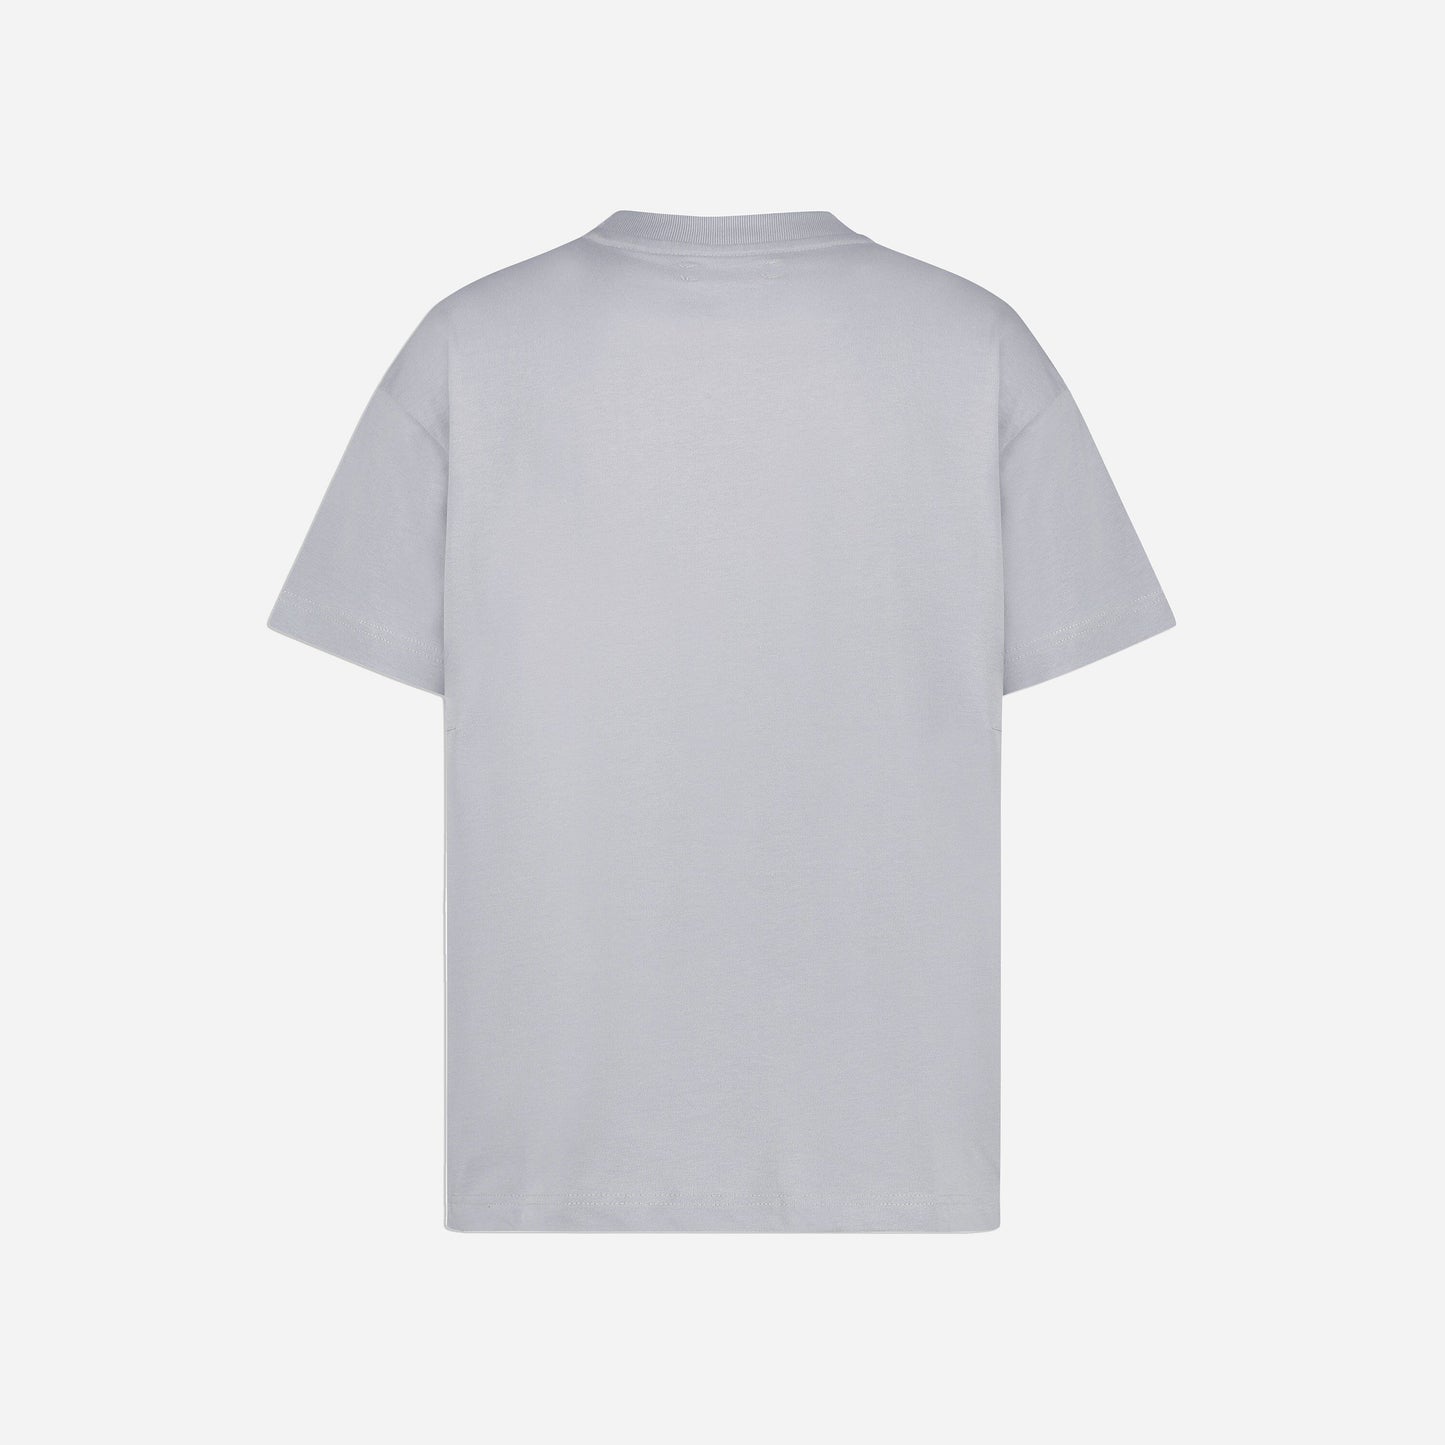 Essential T-Shirt in Concrete Grey